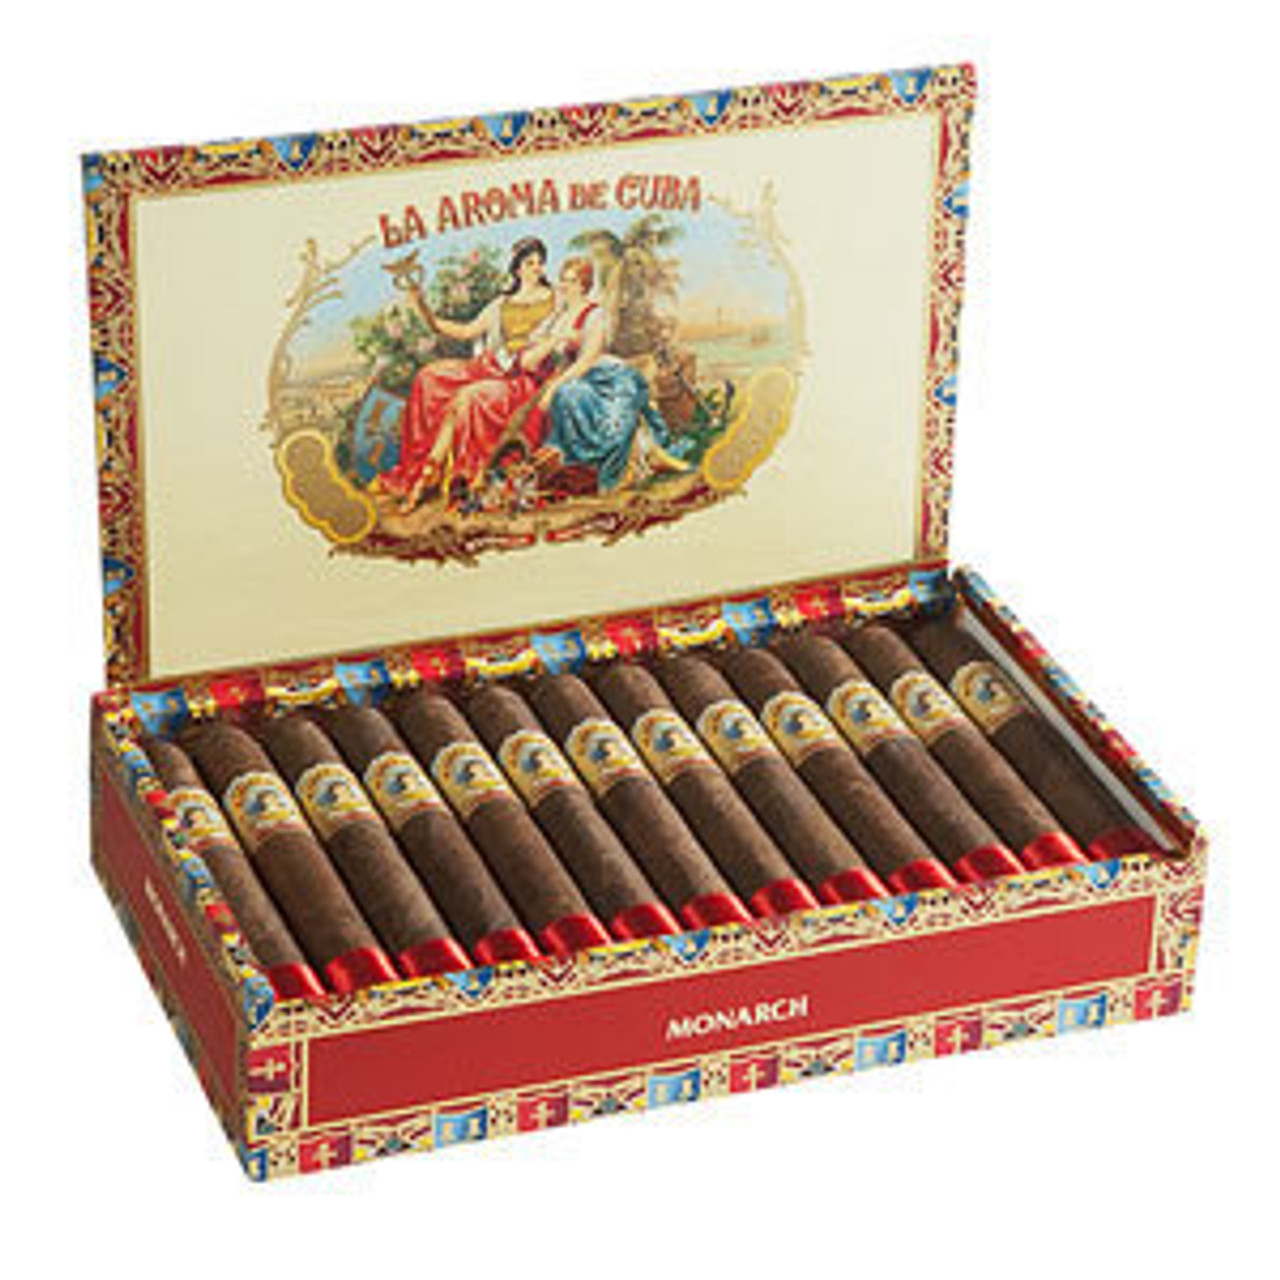 La Aroma de Cuba Double Corona Cigars - 7.5 x 52 (Box of 25) *Box